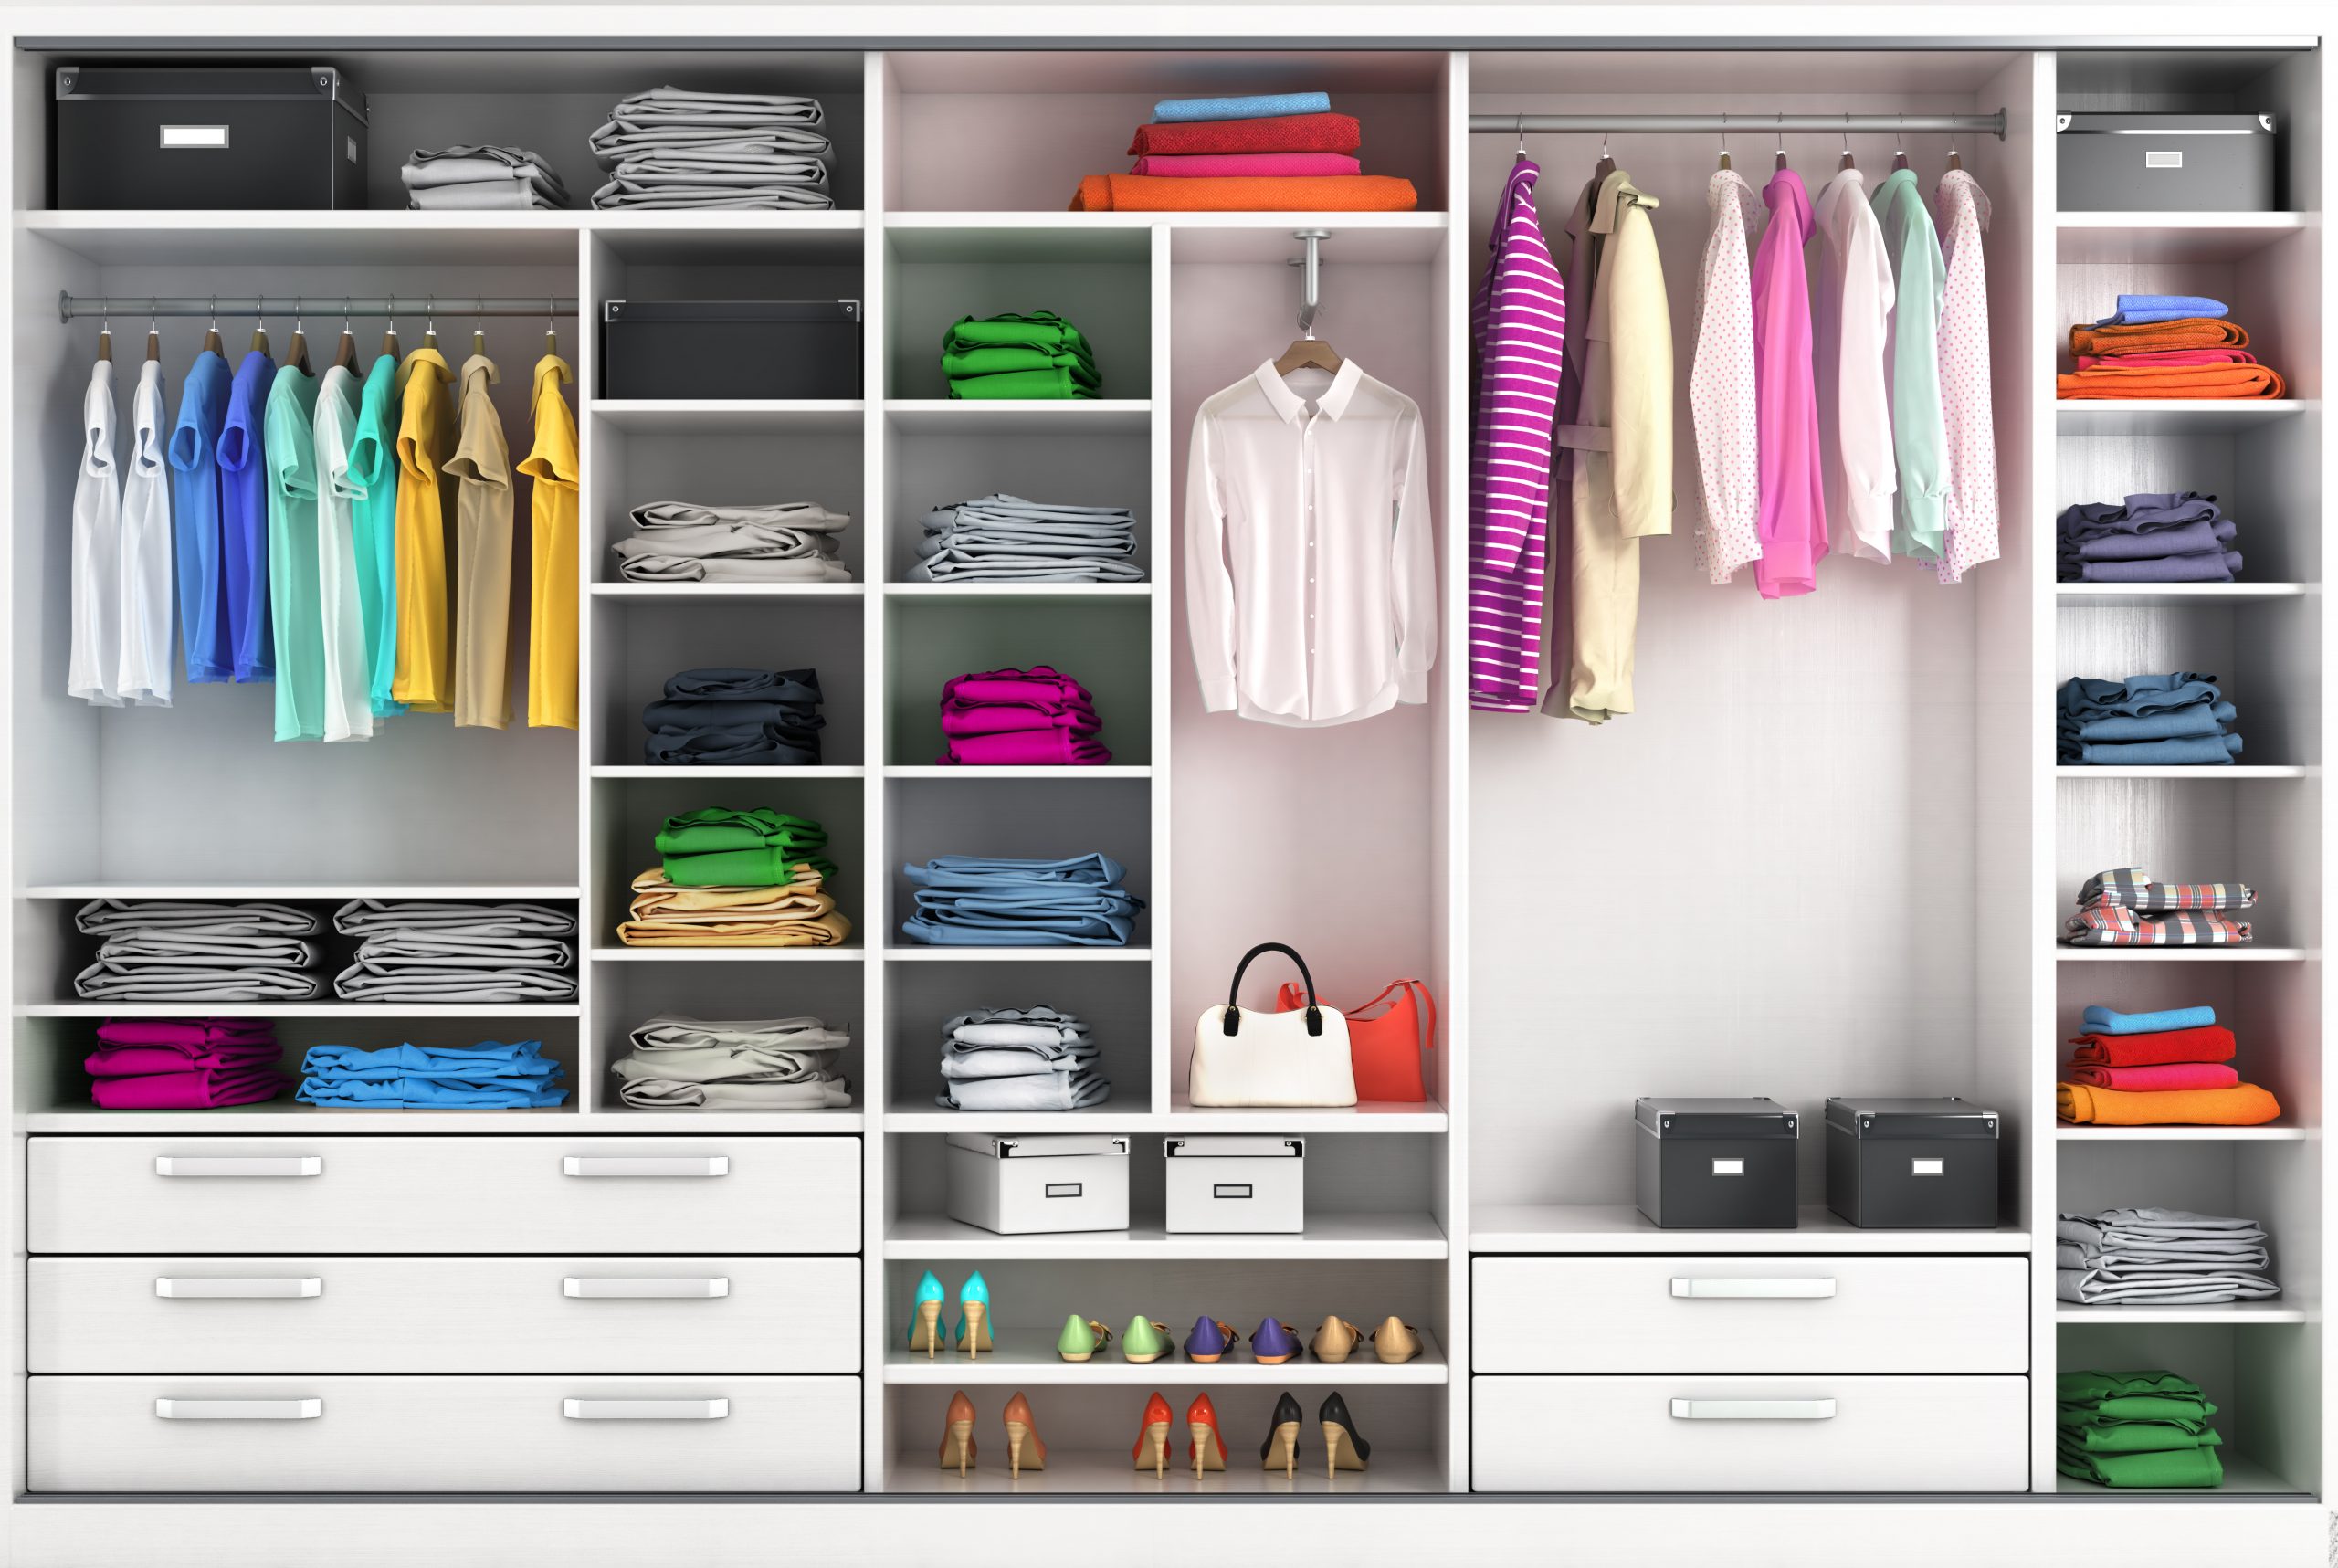 A well organized master closet.